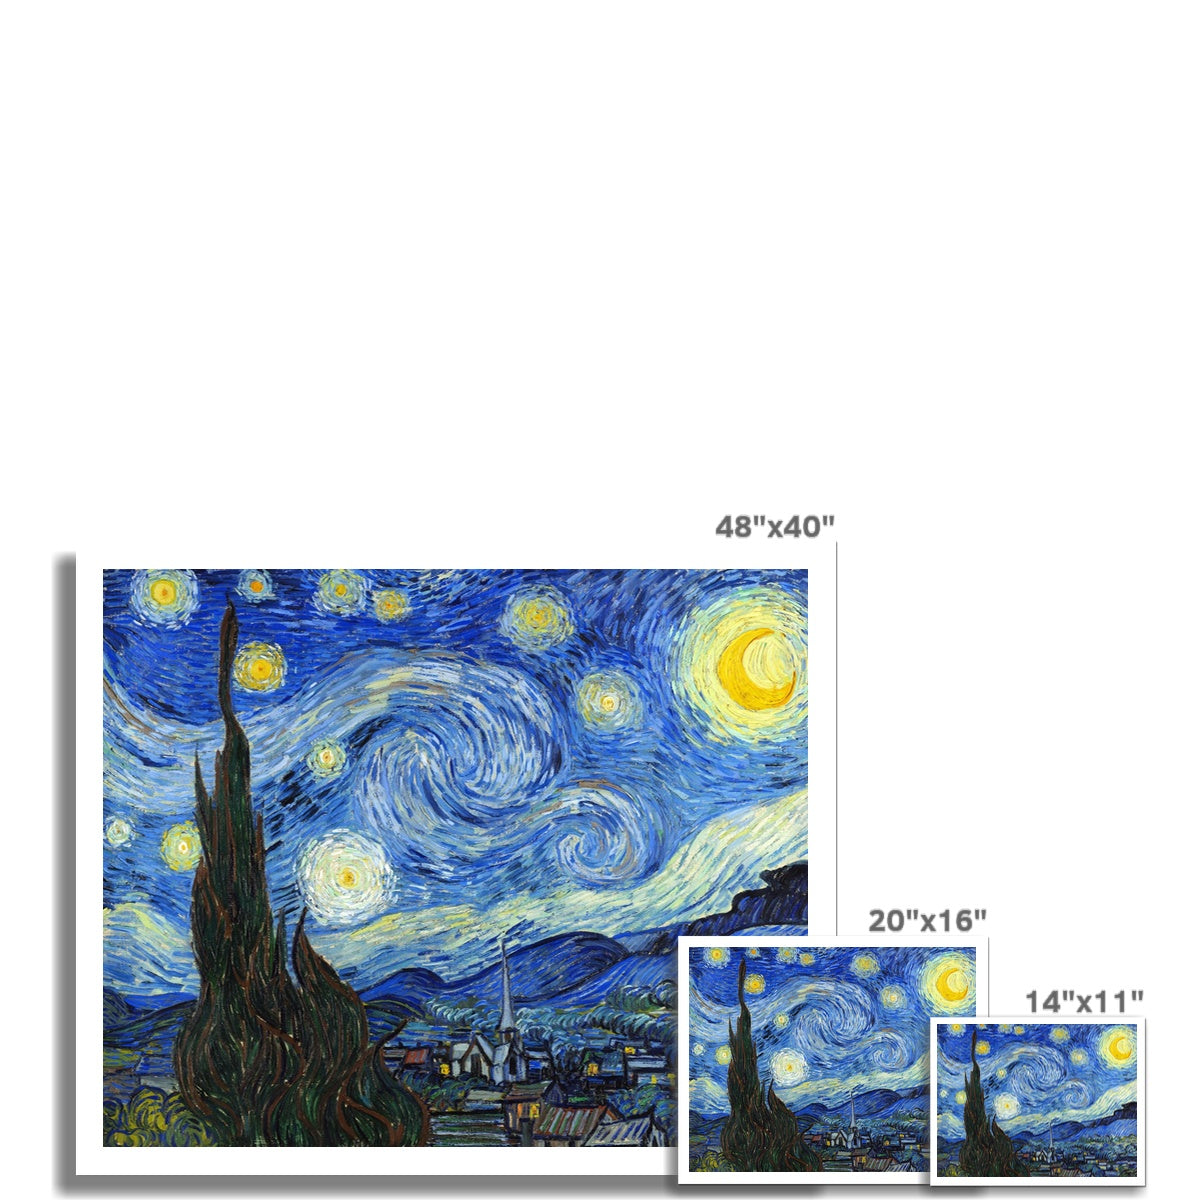 &#39;Starry Night&#39; by Vincent Van Gogh. Open Edition Fine Art Print. Art Gallery Historic Art